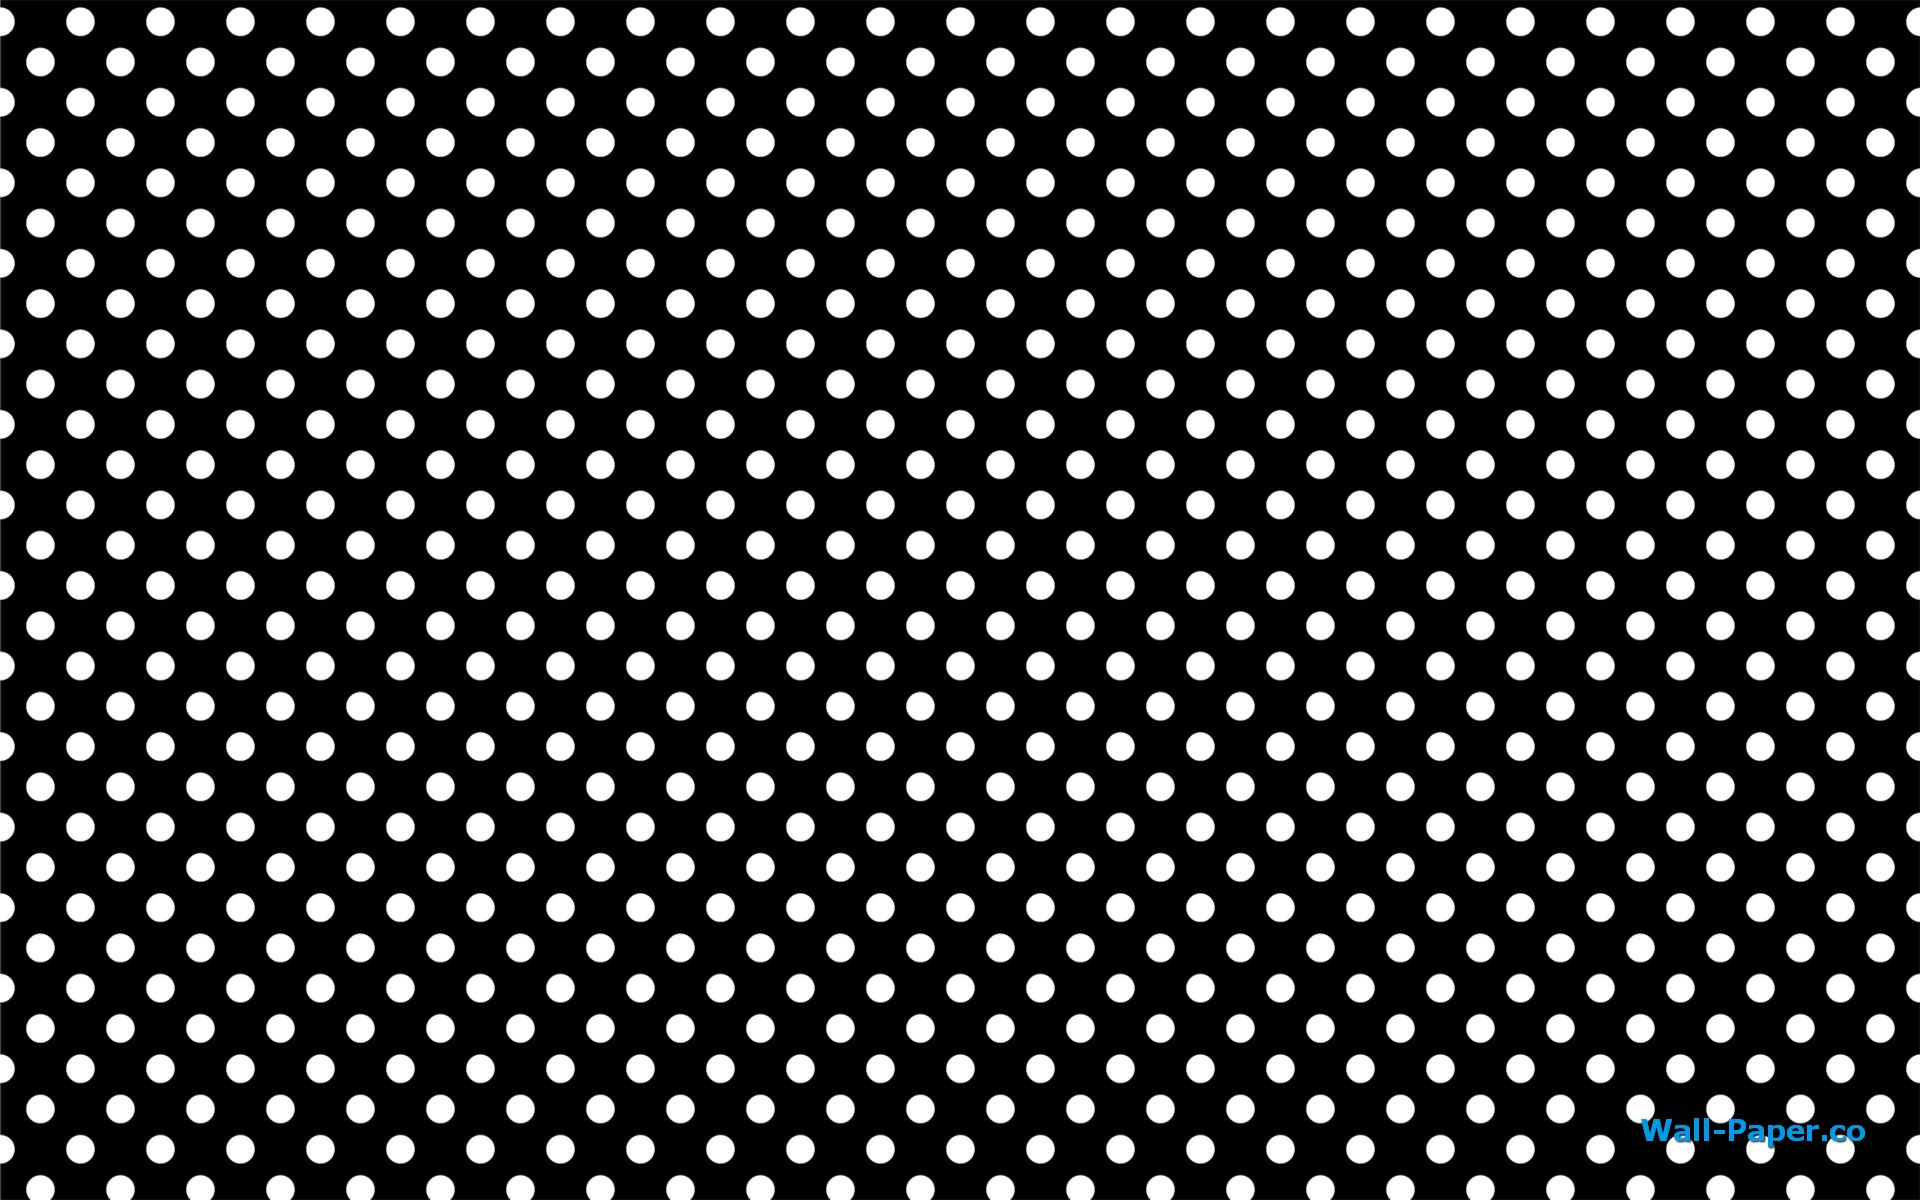 Gold Polka Dot Desktop Wallpaper White Dots On Black Background